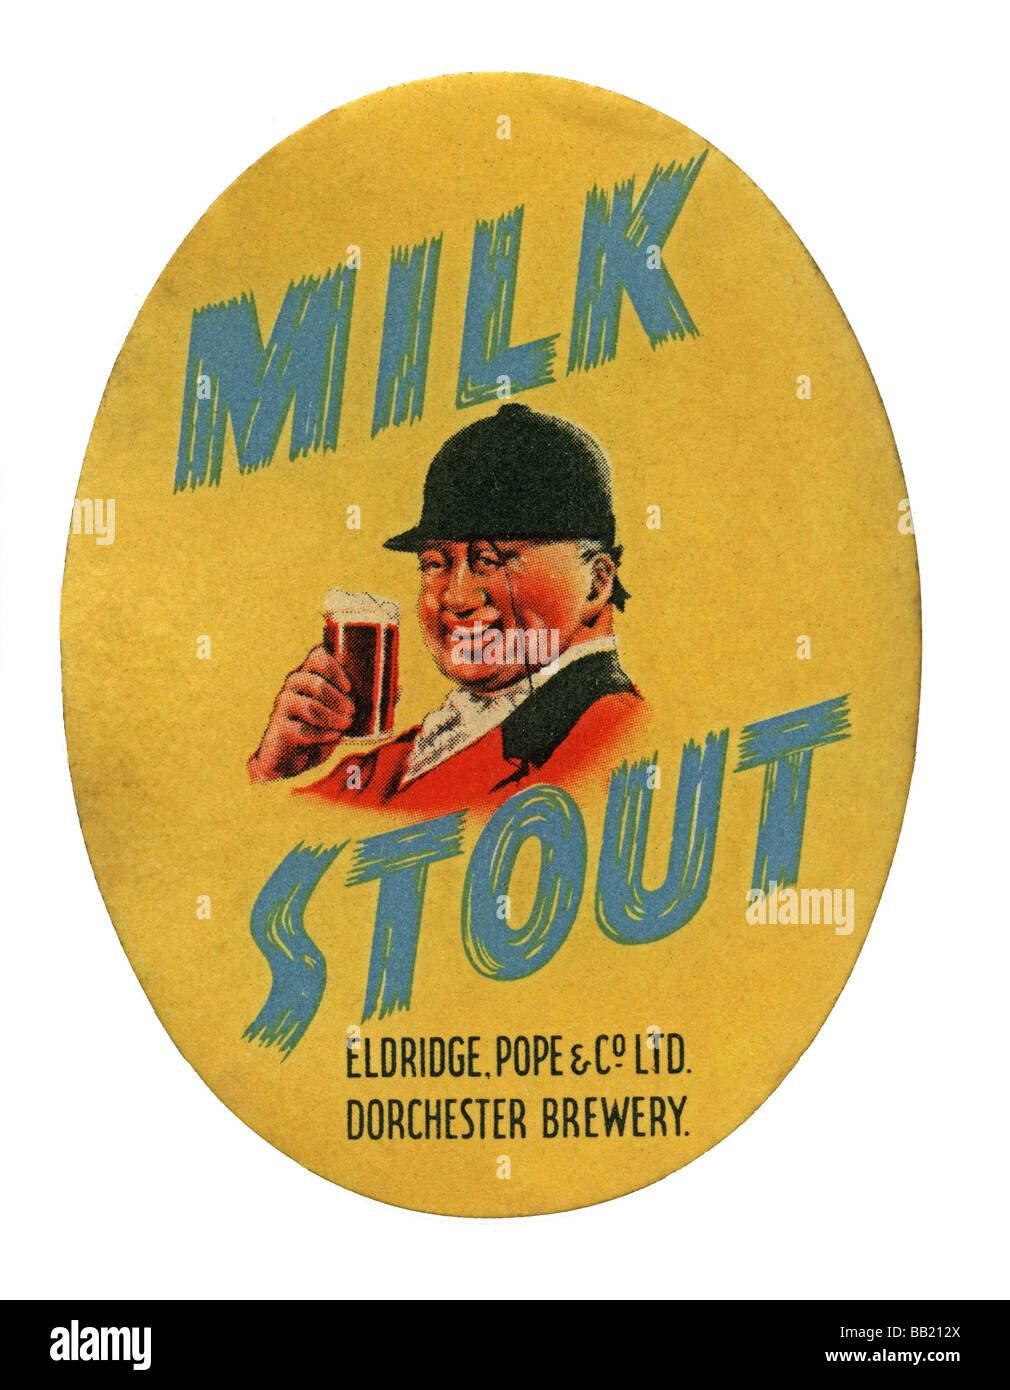 Old British beer label for Eldridge Pope's Milk Stout, Dorchester, Dorset Stock Photo